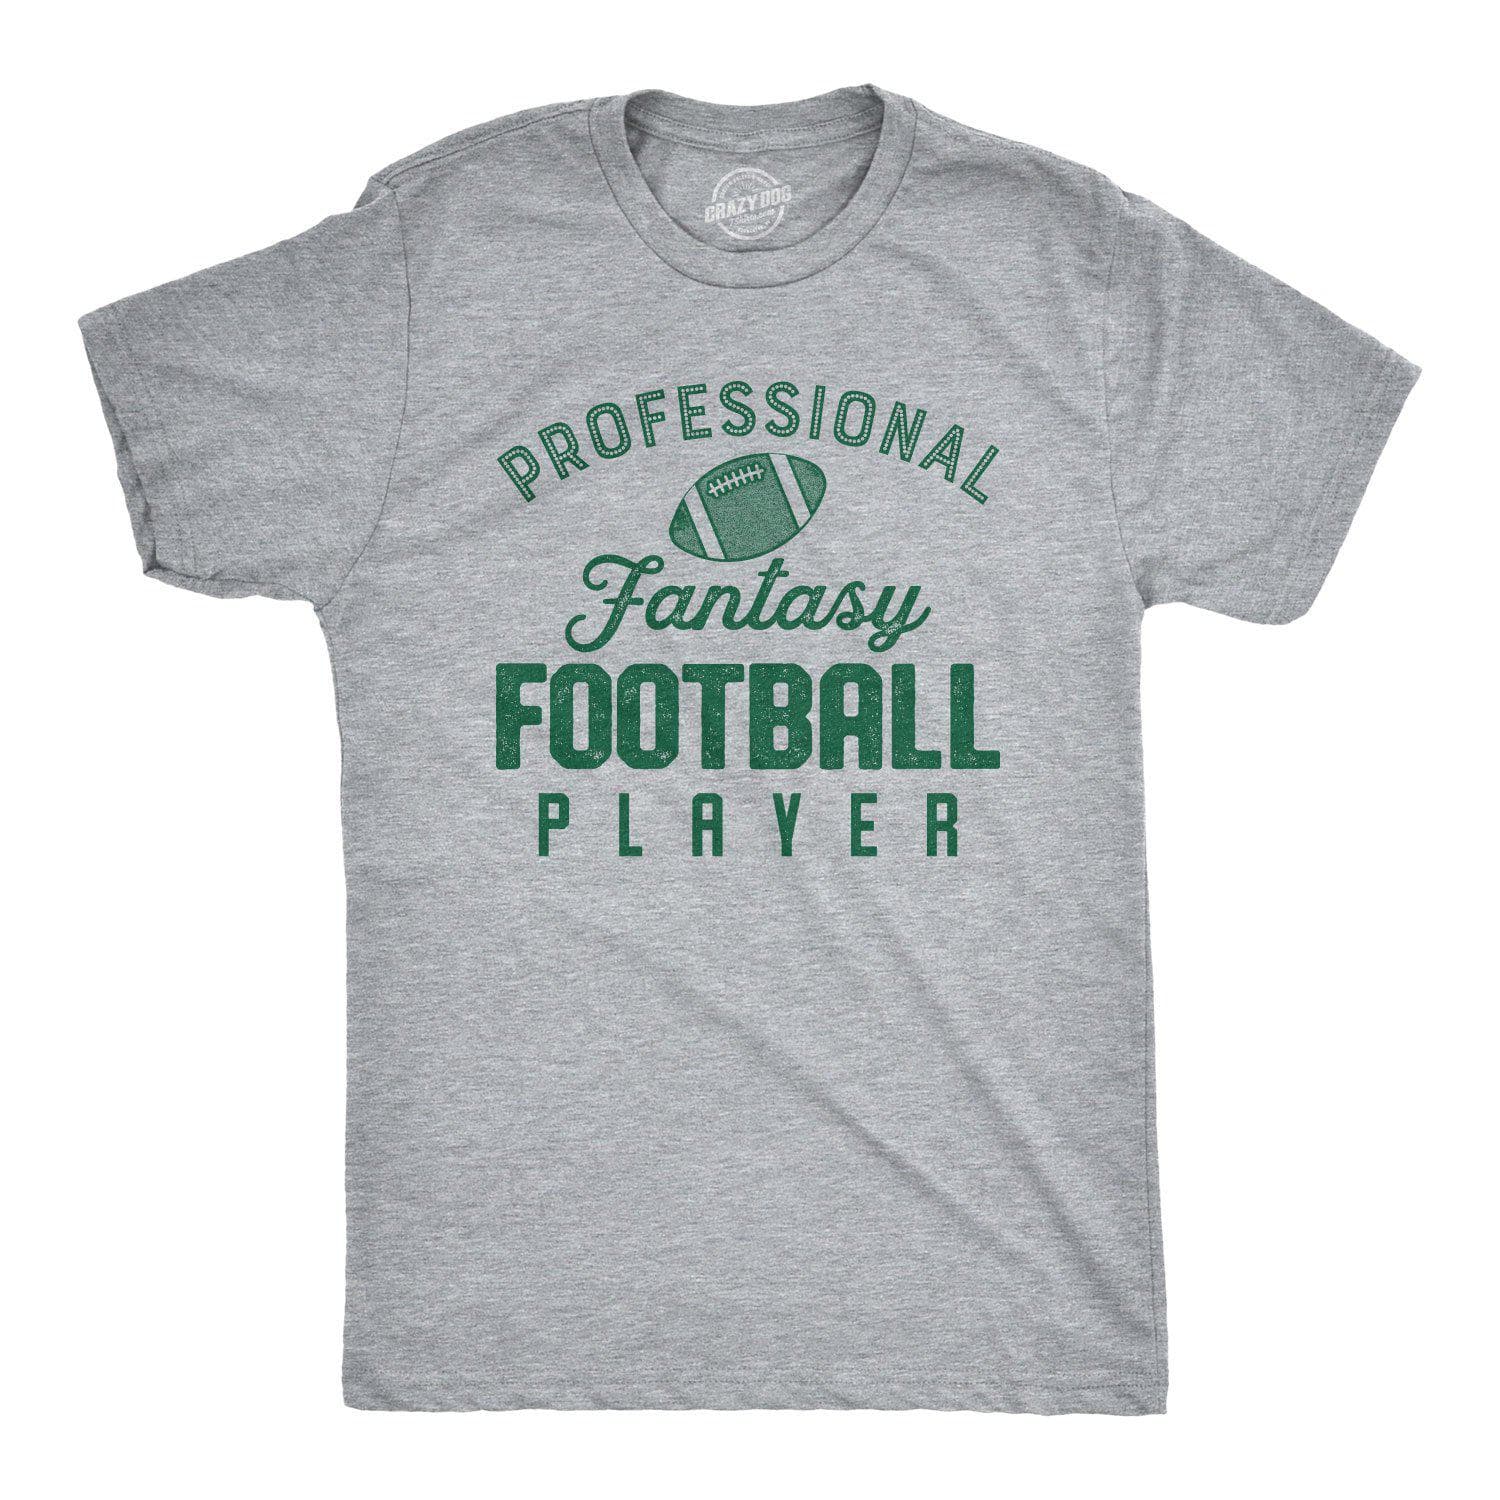 Professional Fantasy Football Player Men's Tshirt - Crazy Dog T-Shirts